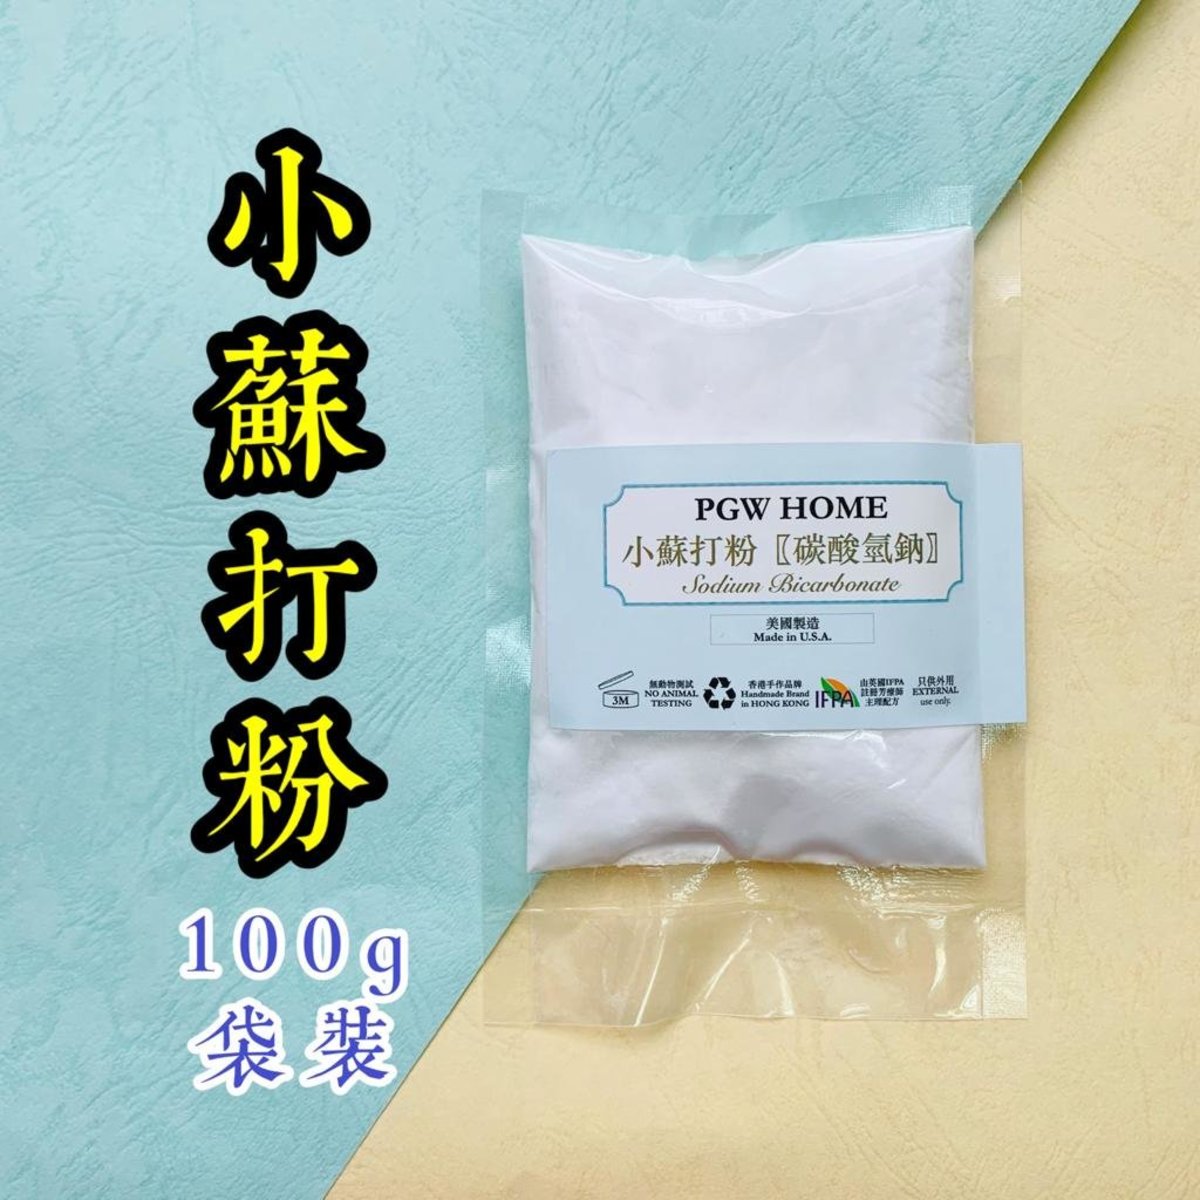 Pgw 小蘇打粉 碳酸氫鈉 100g Hktvmall 香港最大網購平台